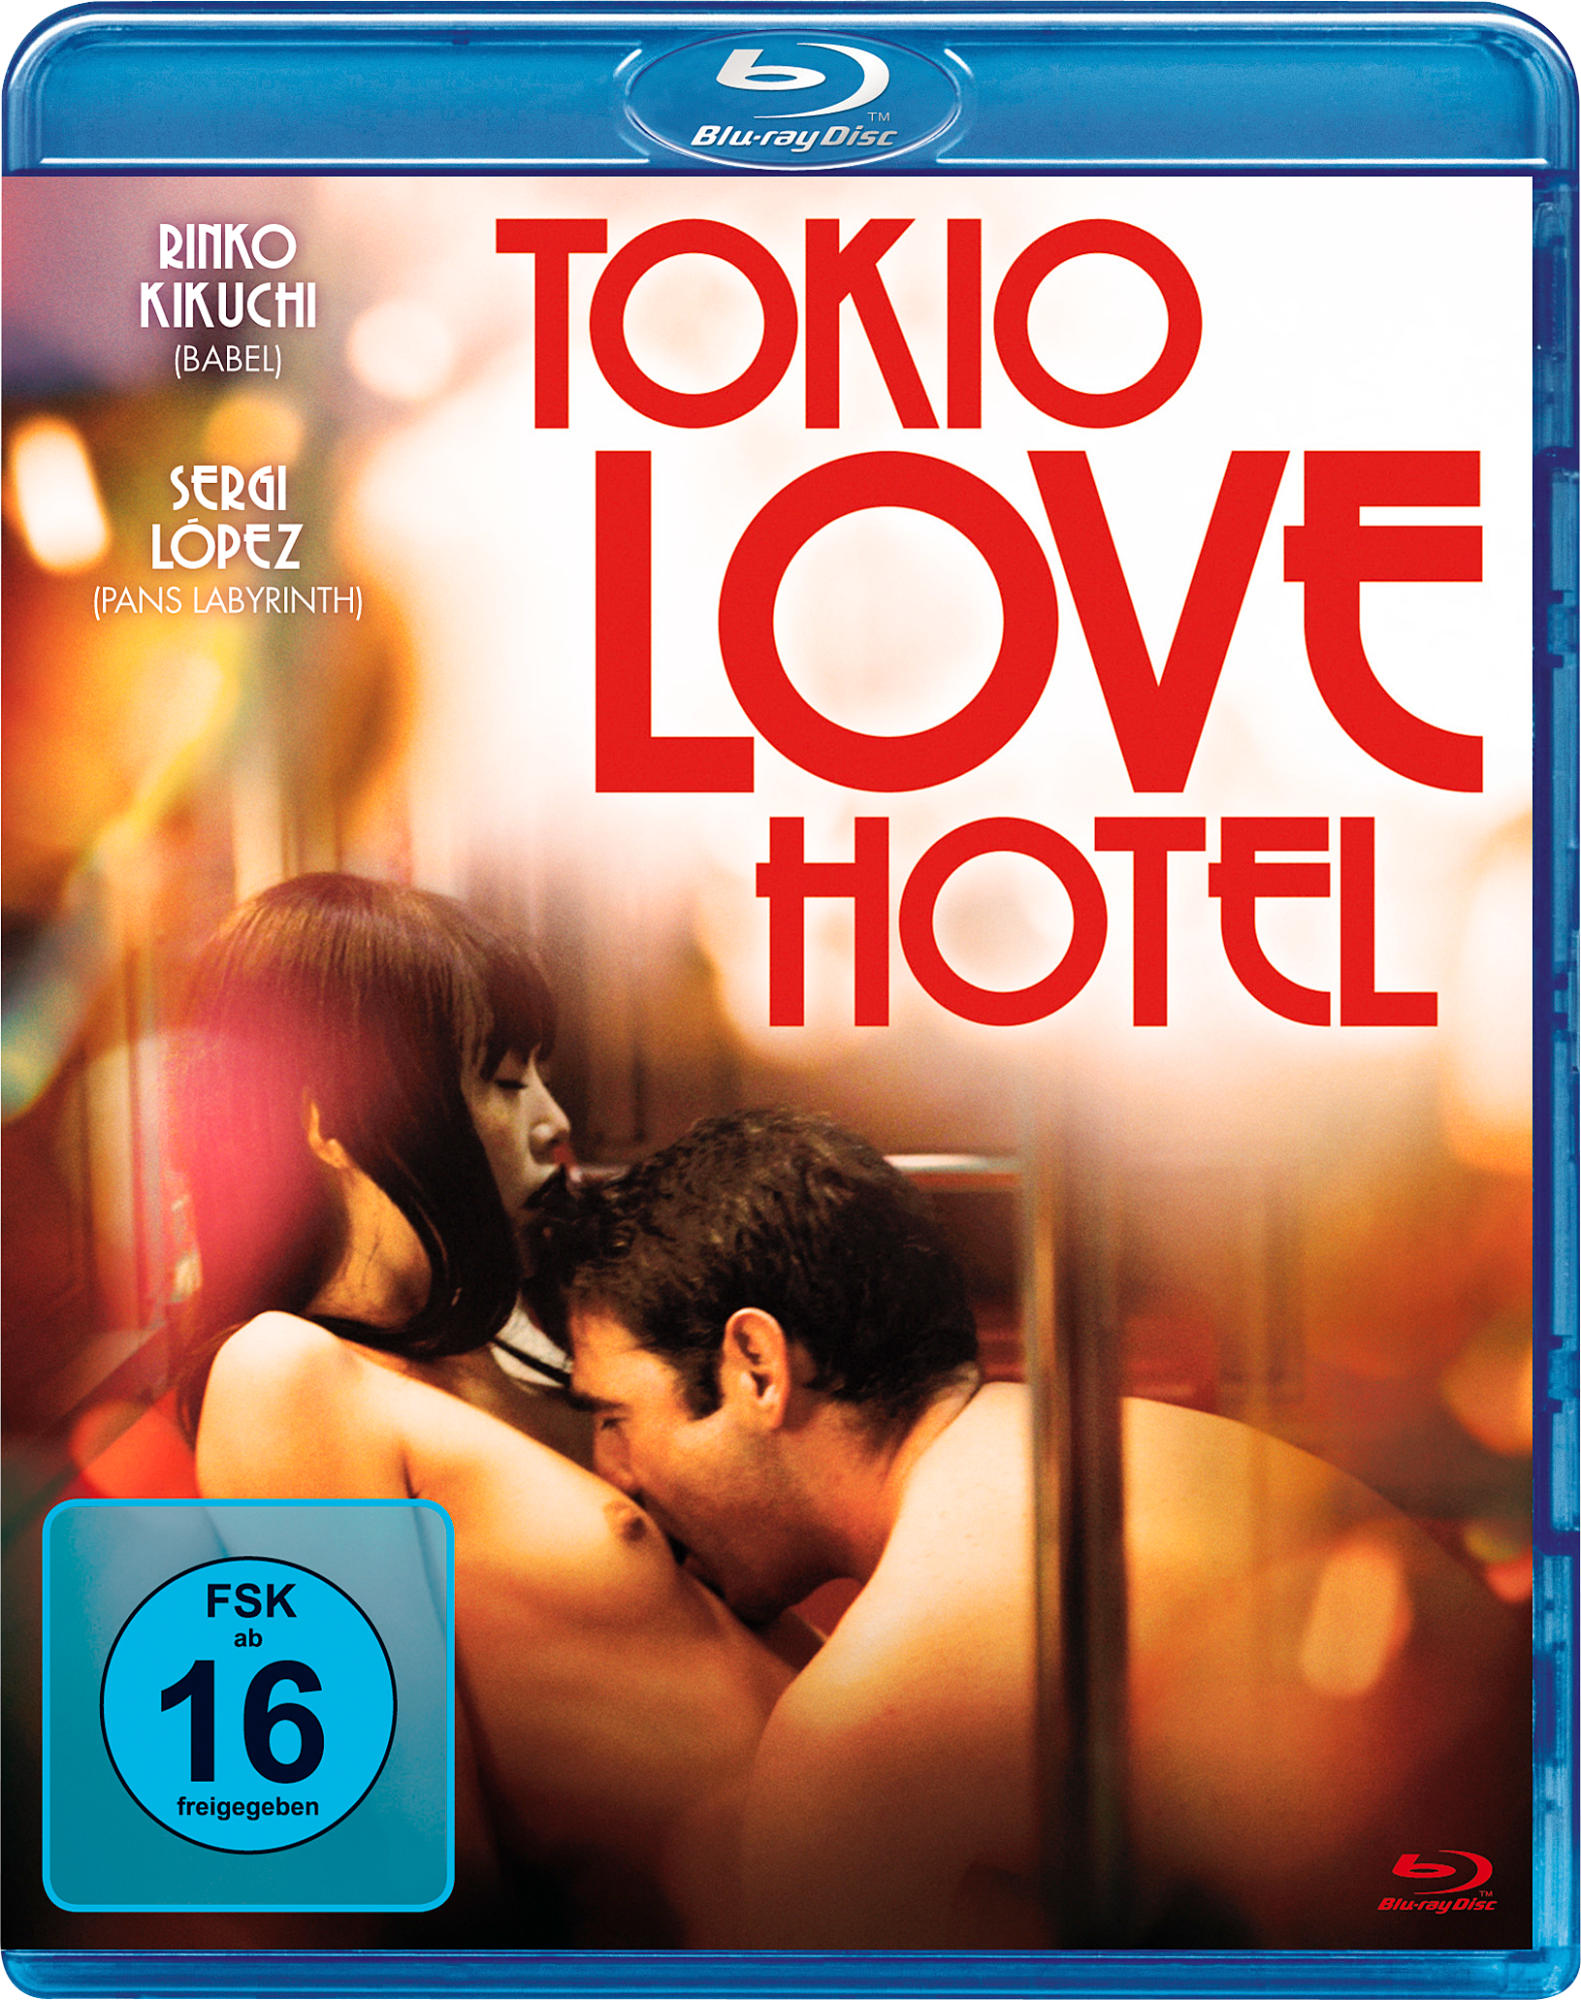 Hotel Love Blu-ray Tokio